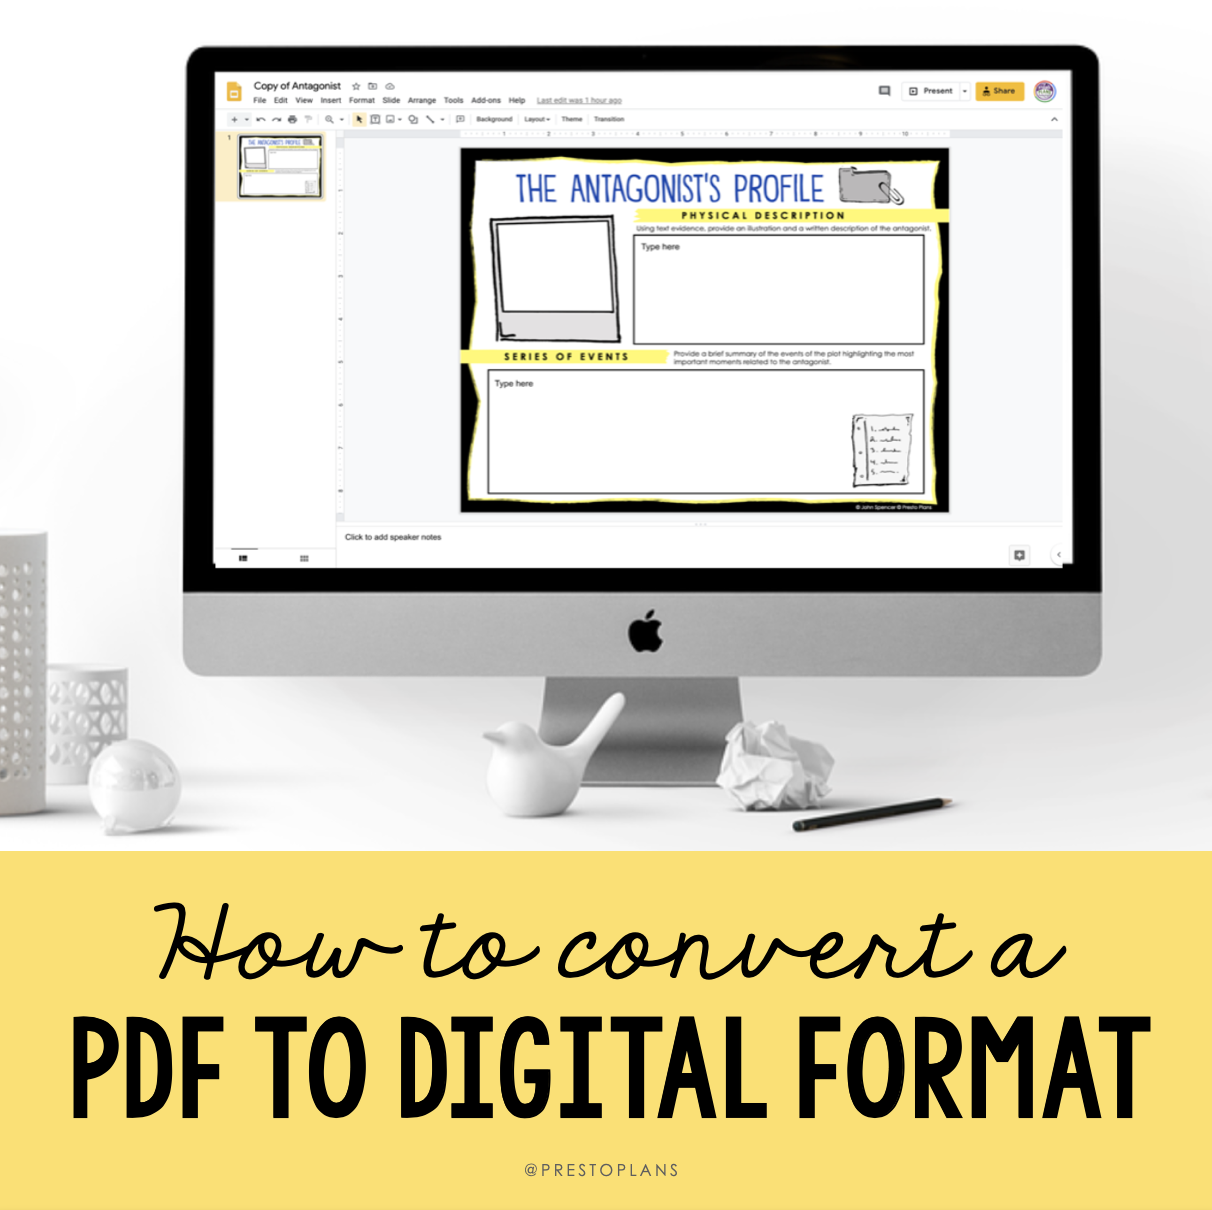 converting a PDF to digital format